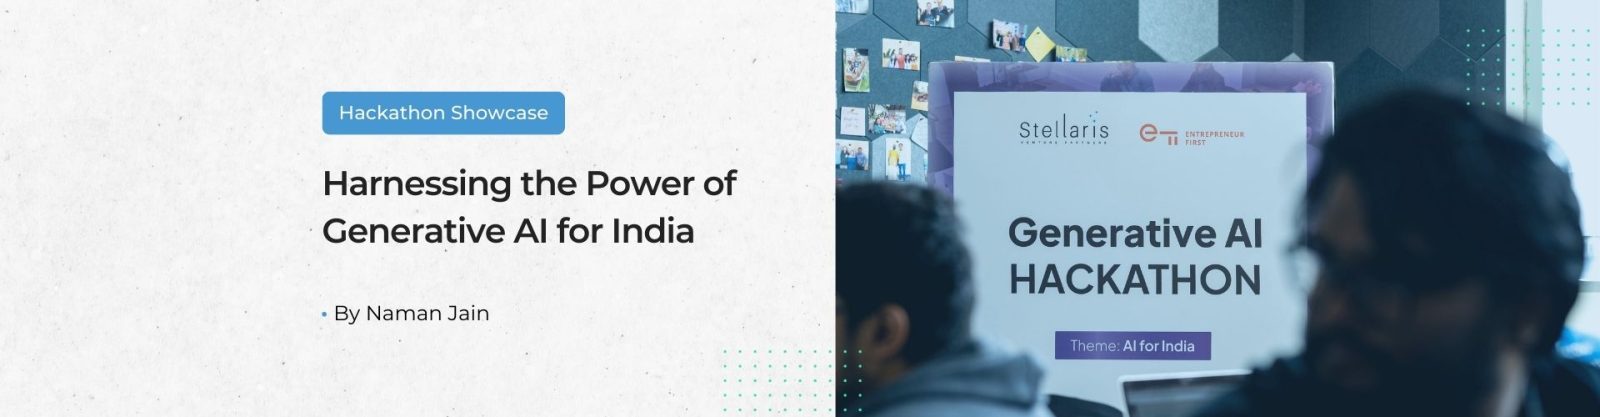 Harnessing Gen AI for India: Hackathon Showcase